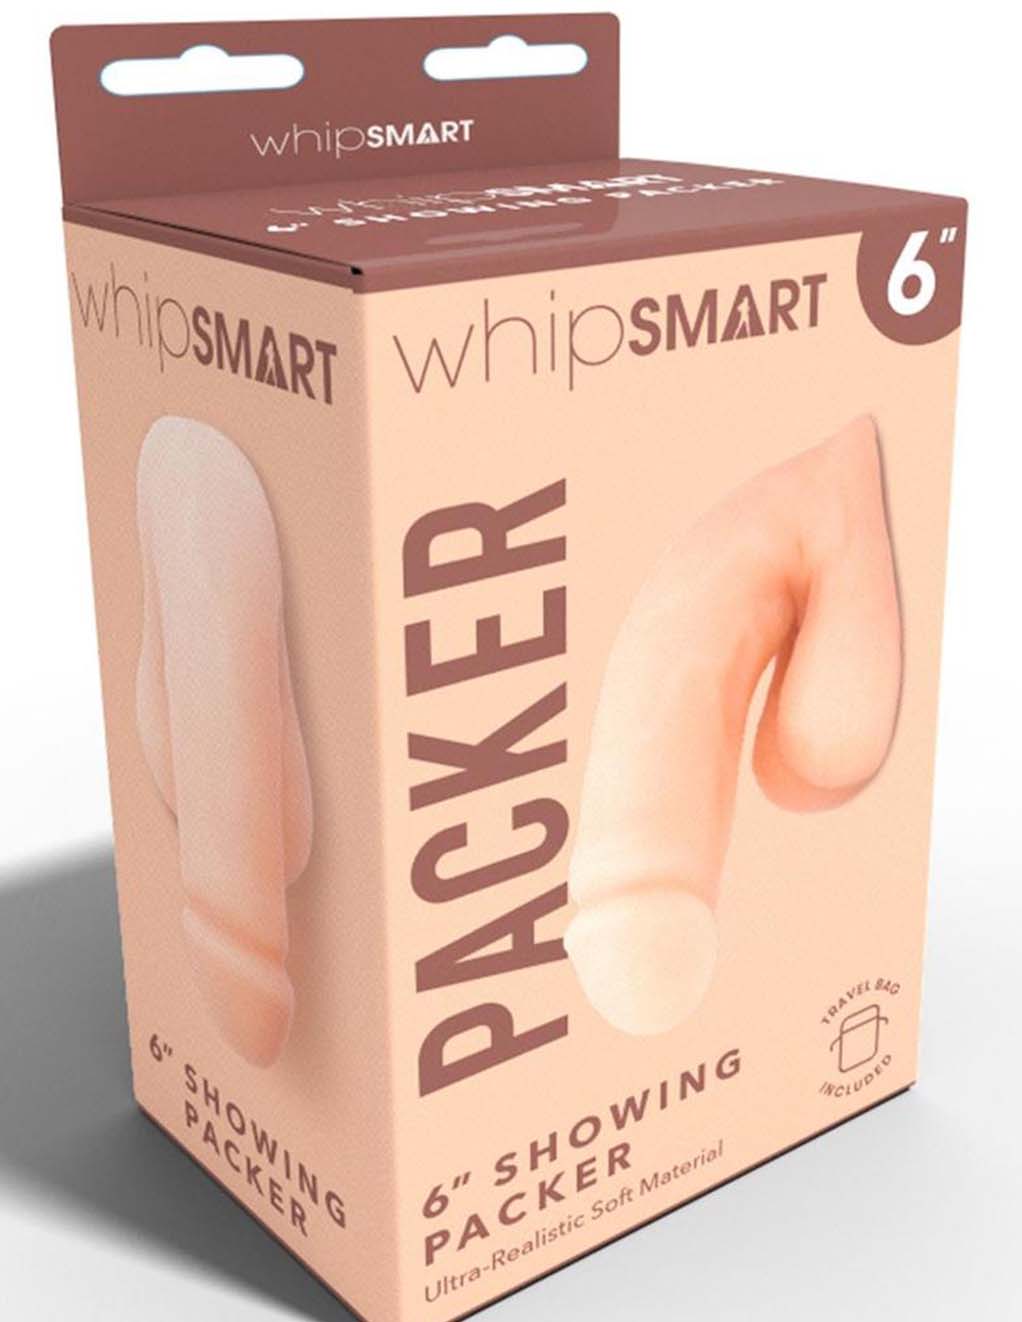 WhipSmart 6" Showing Packer- Vanilla- Box